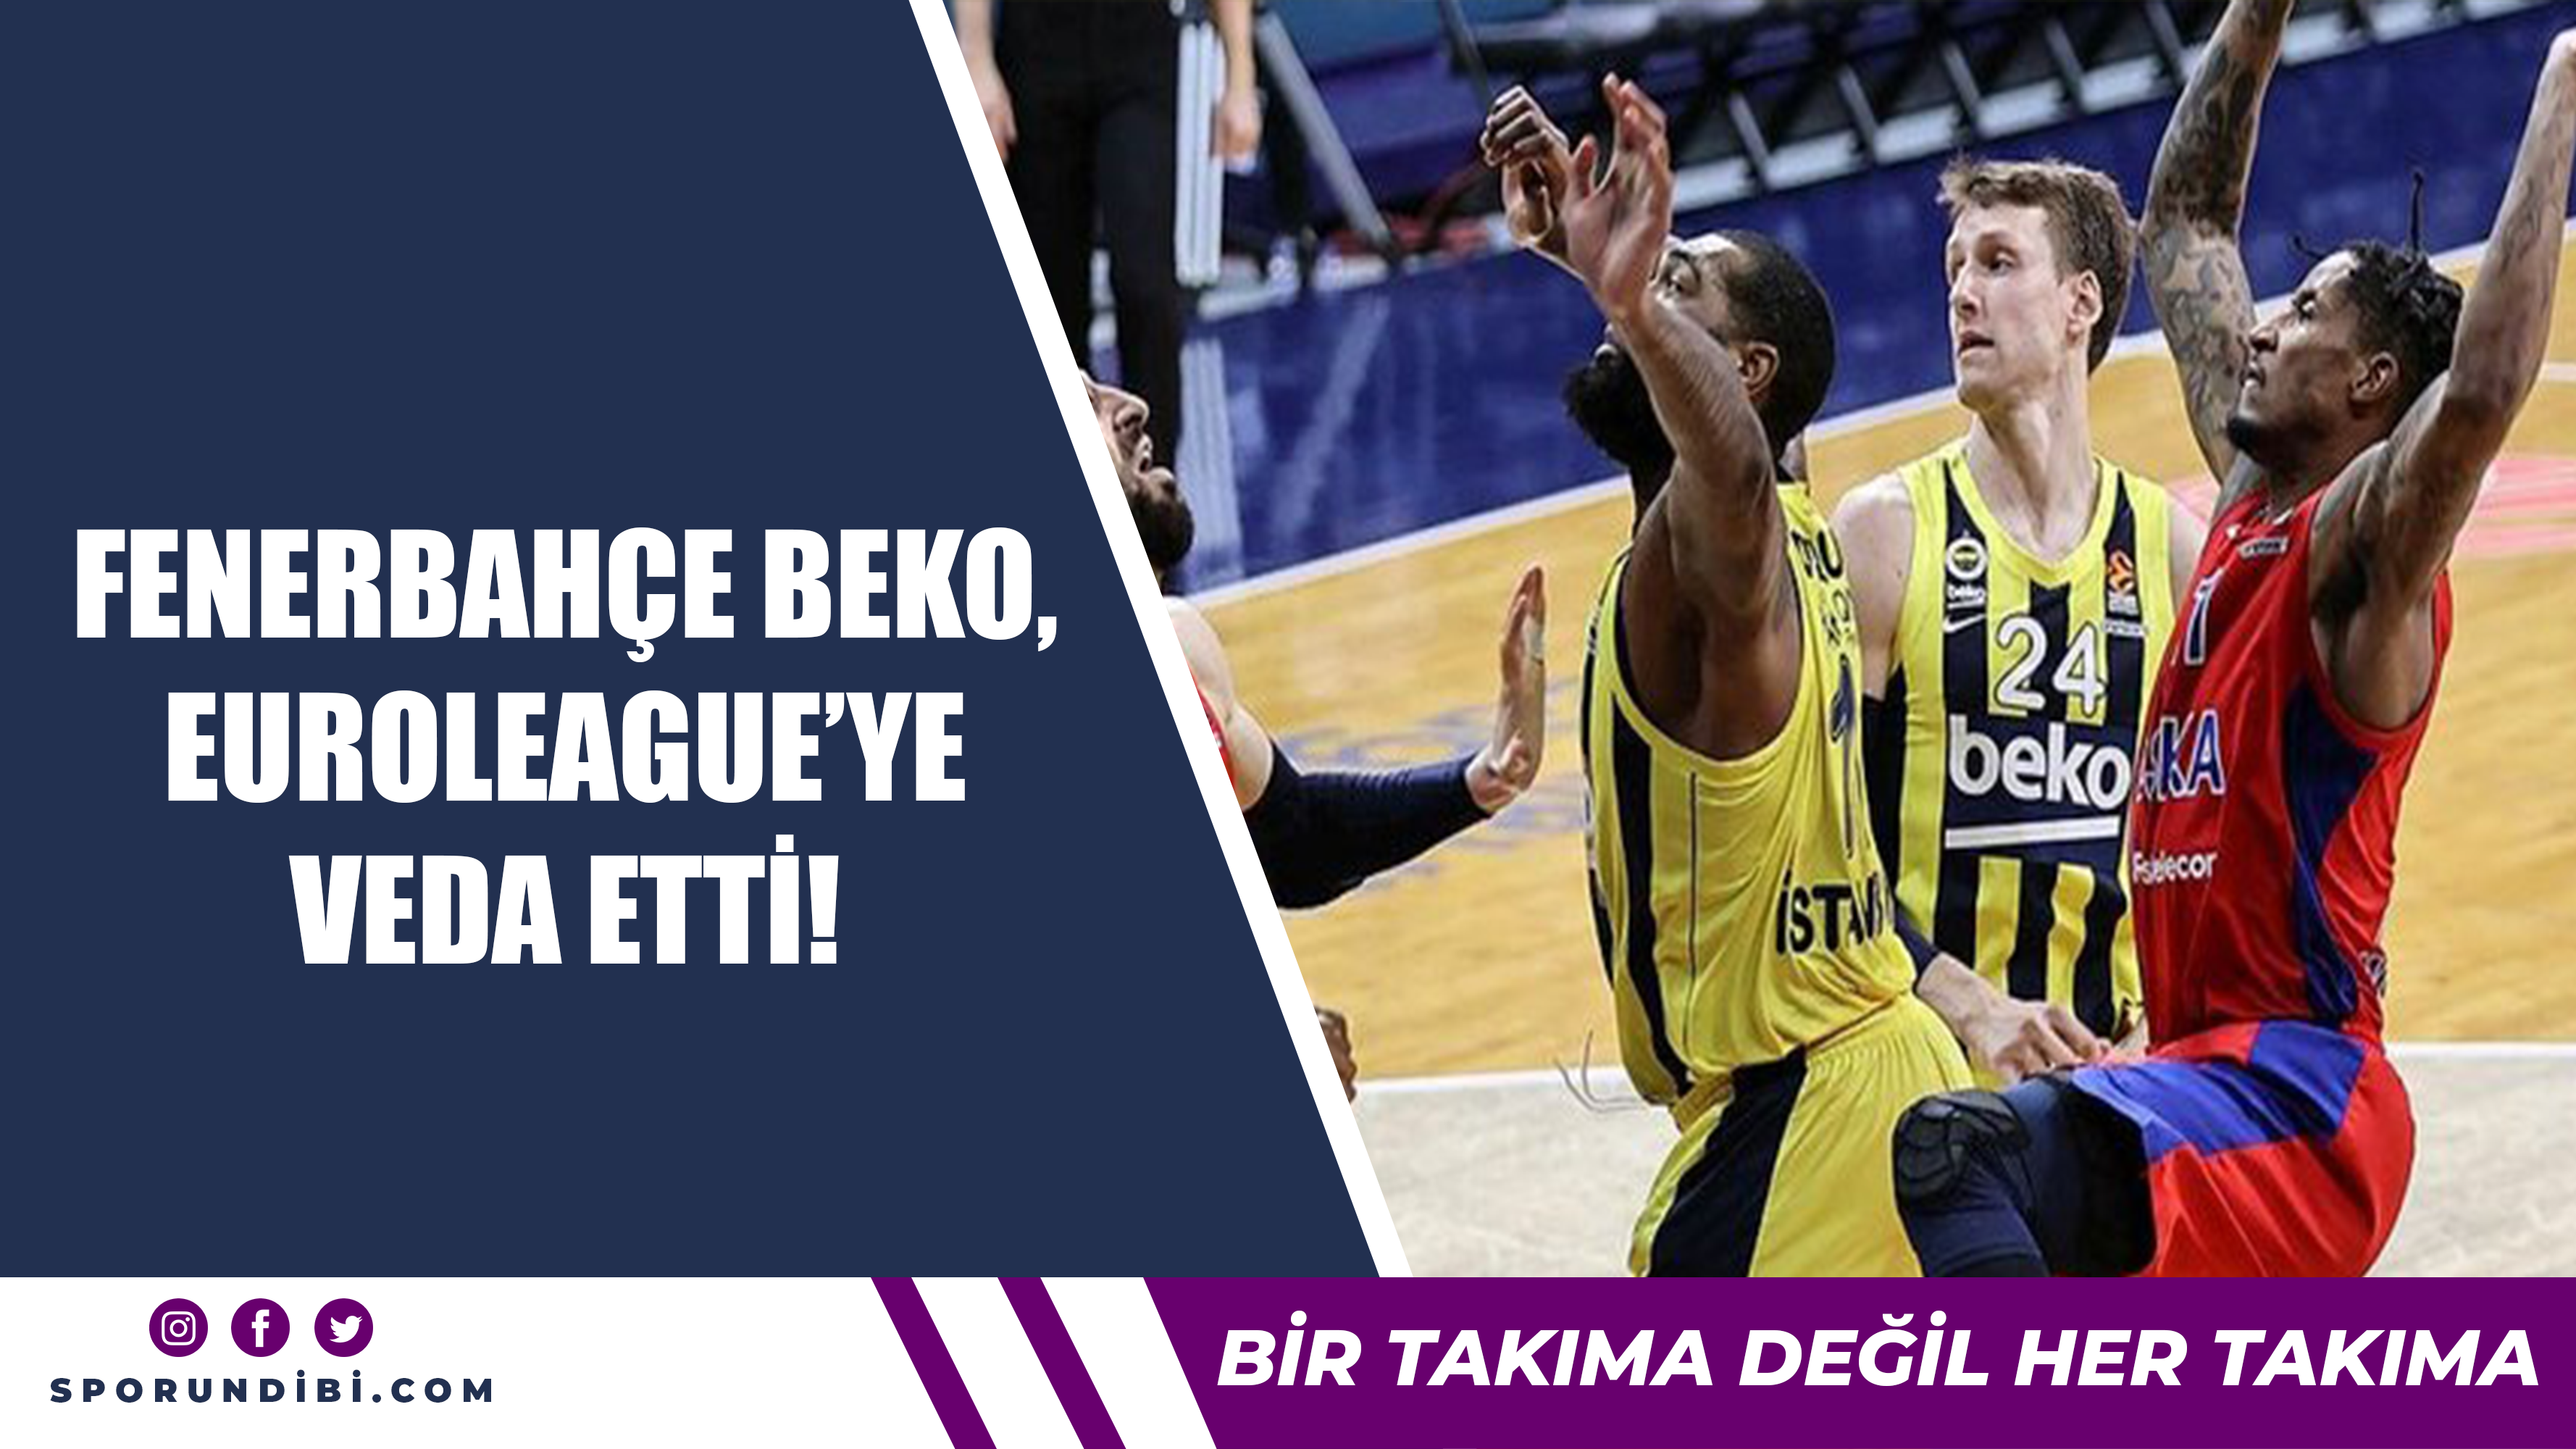 Fenerbahçe Beko, Euroleague'ye veda etti!